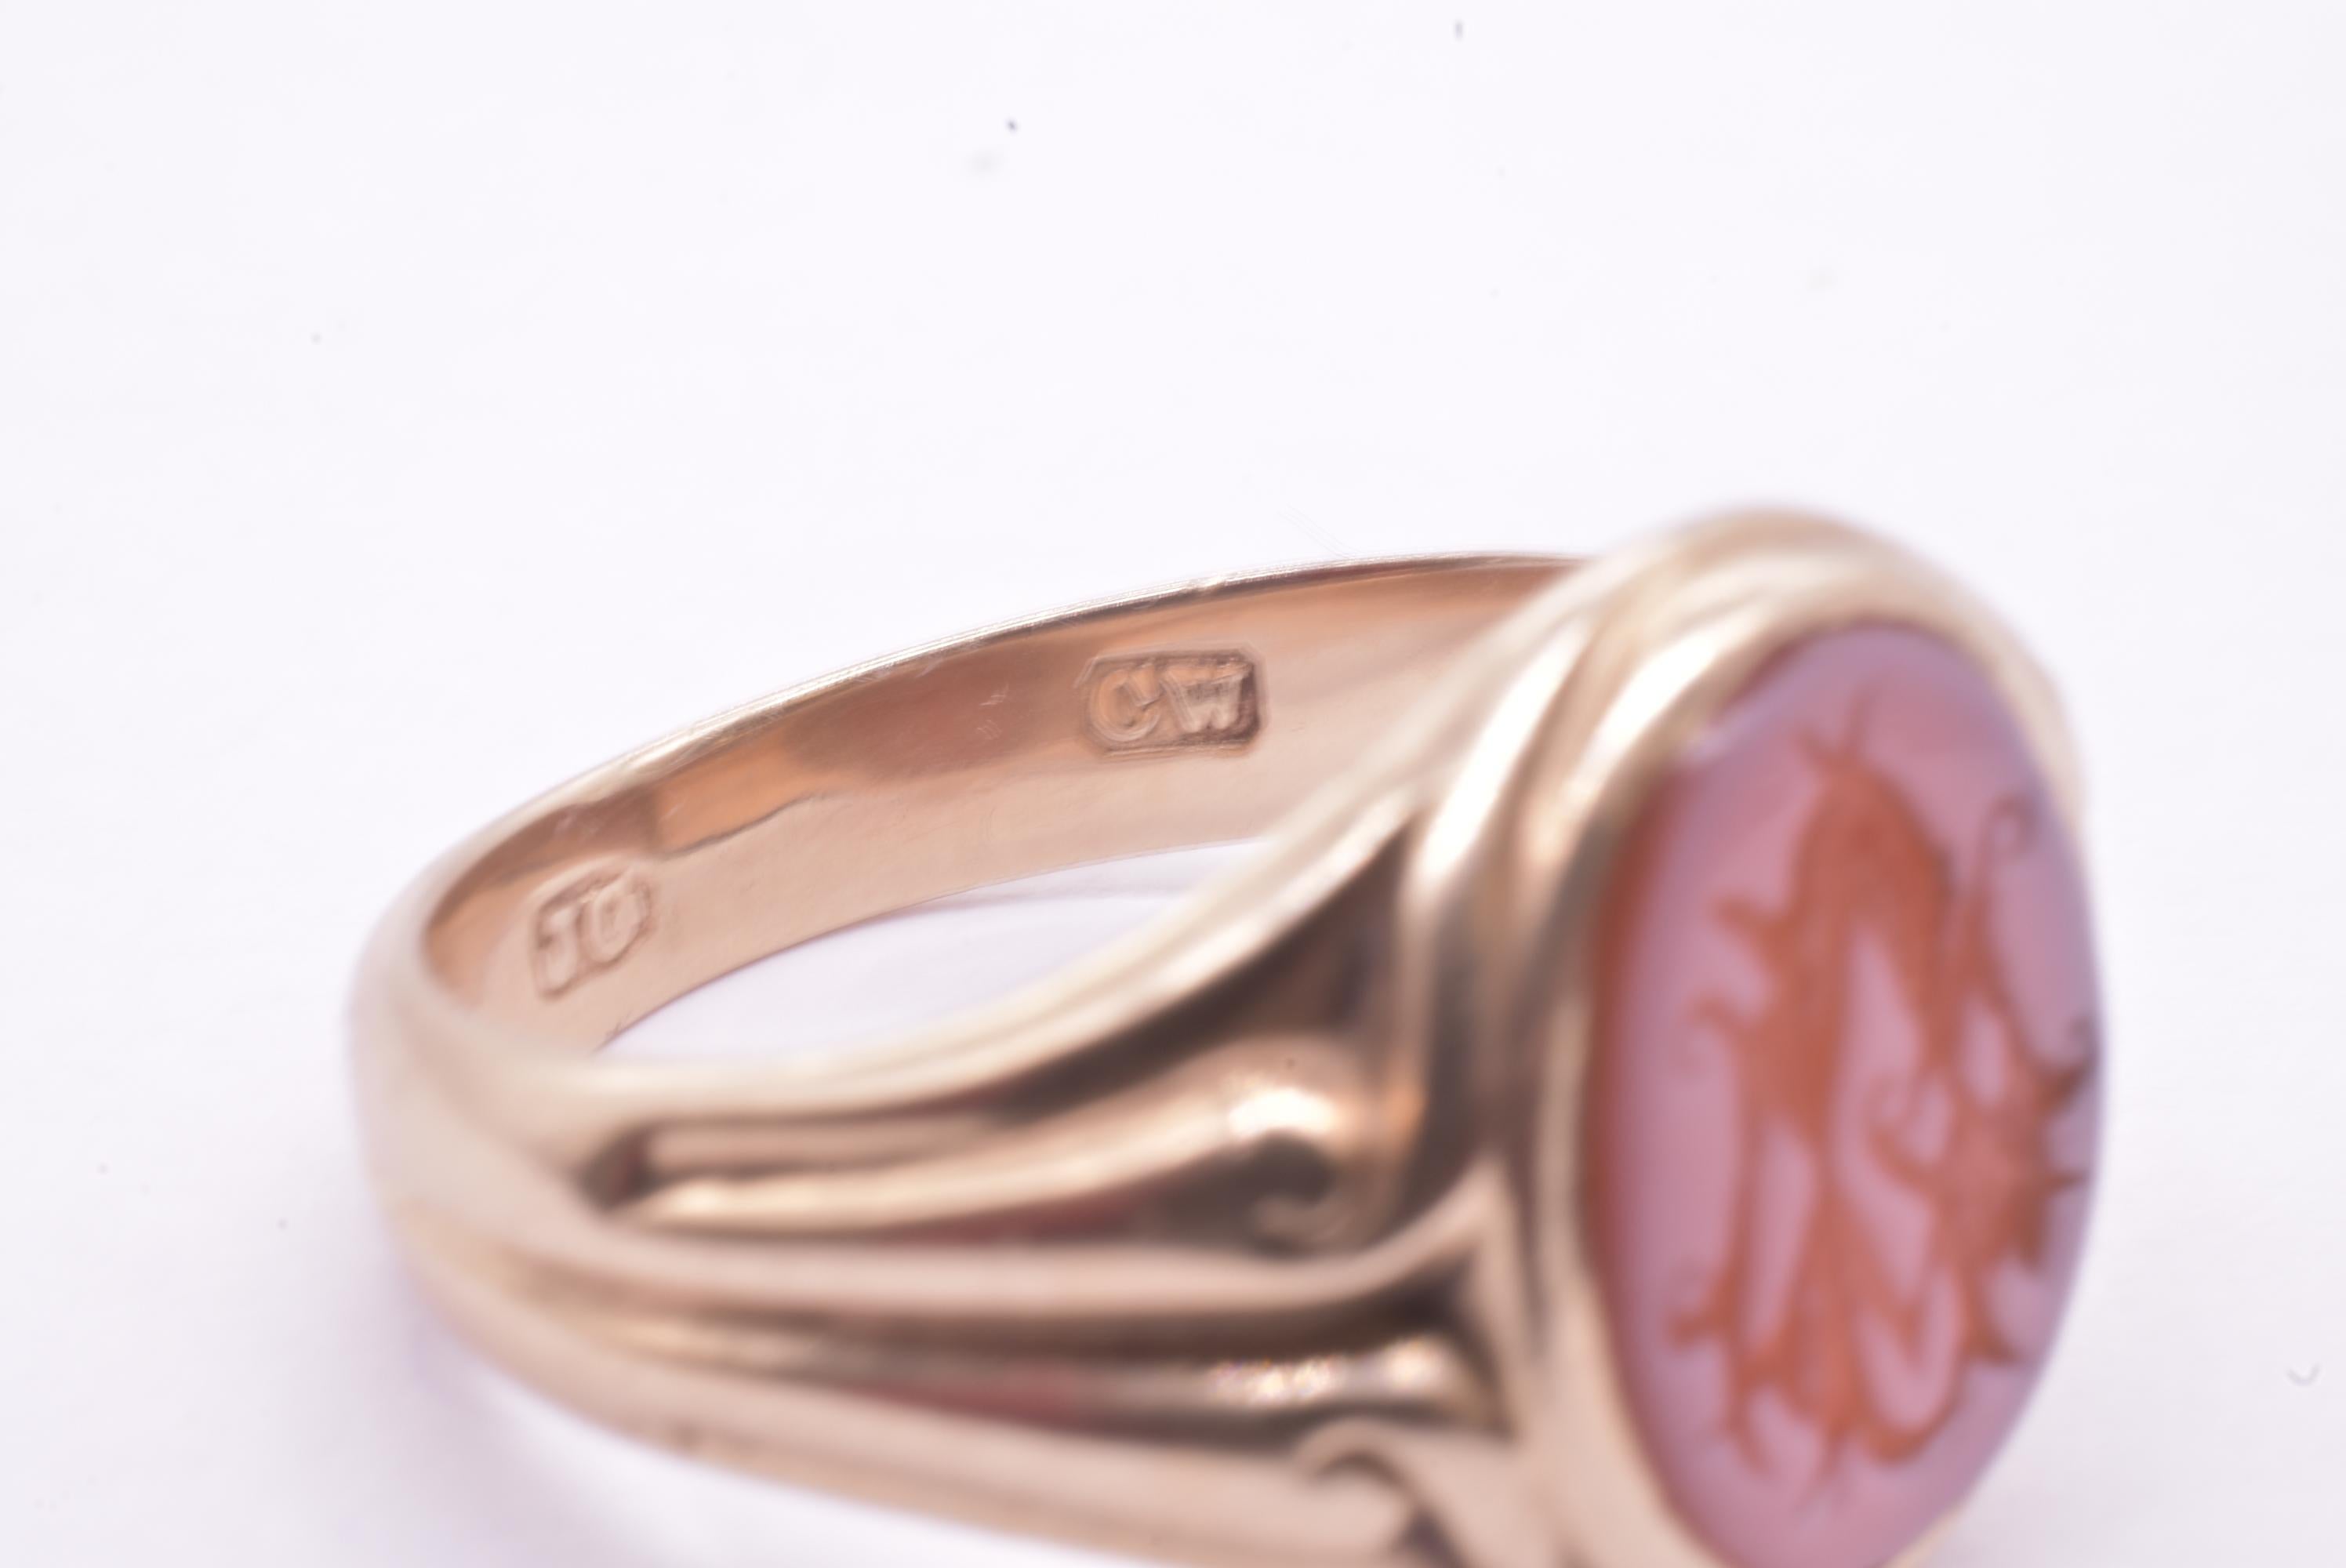 Cabochon Hallmarked 1897 Chester 15K Monogrammed Carnelian Signet Ring